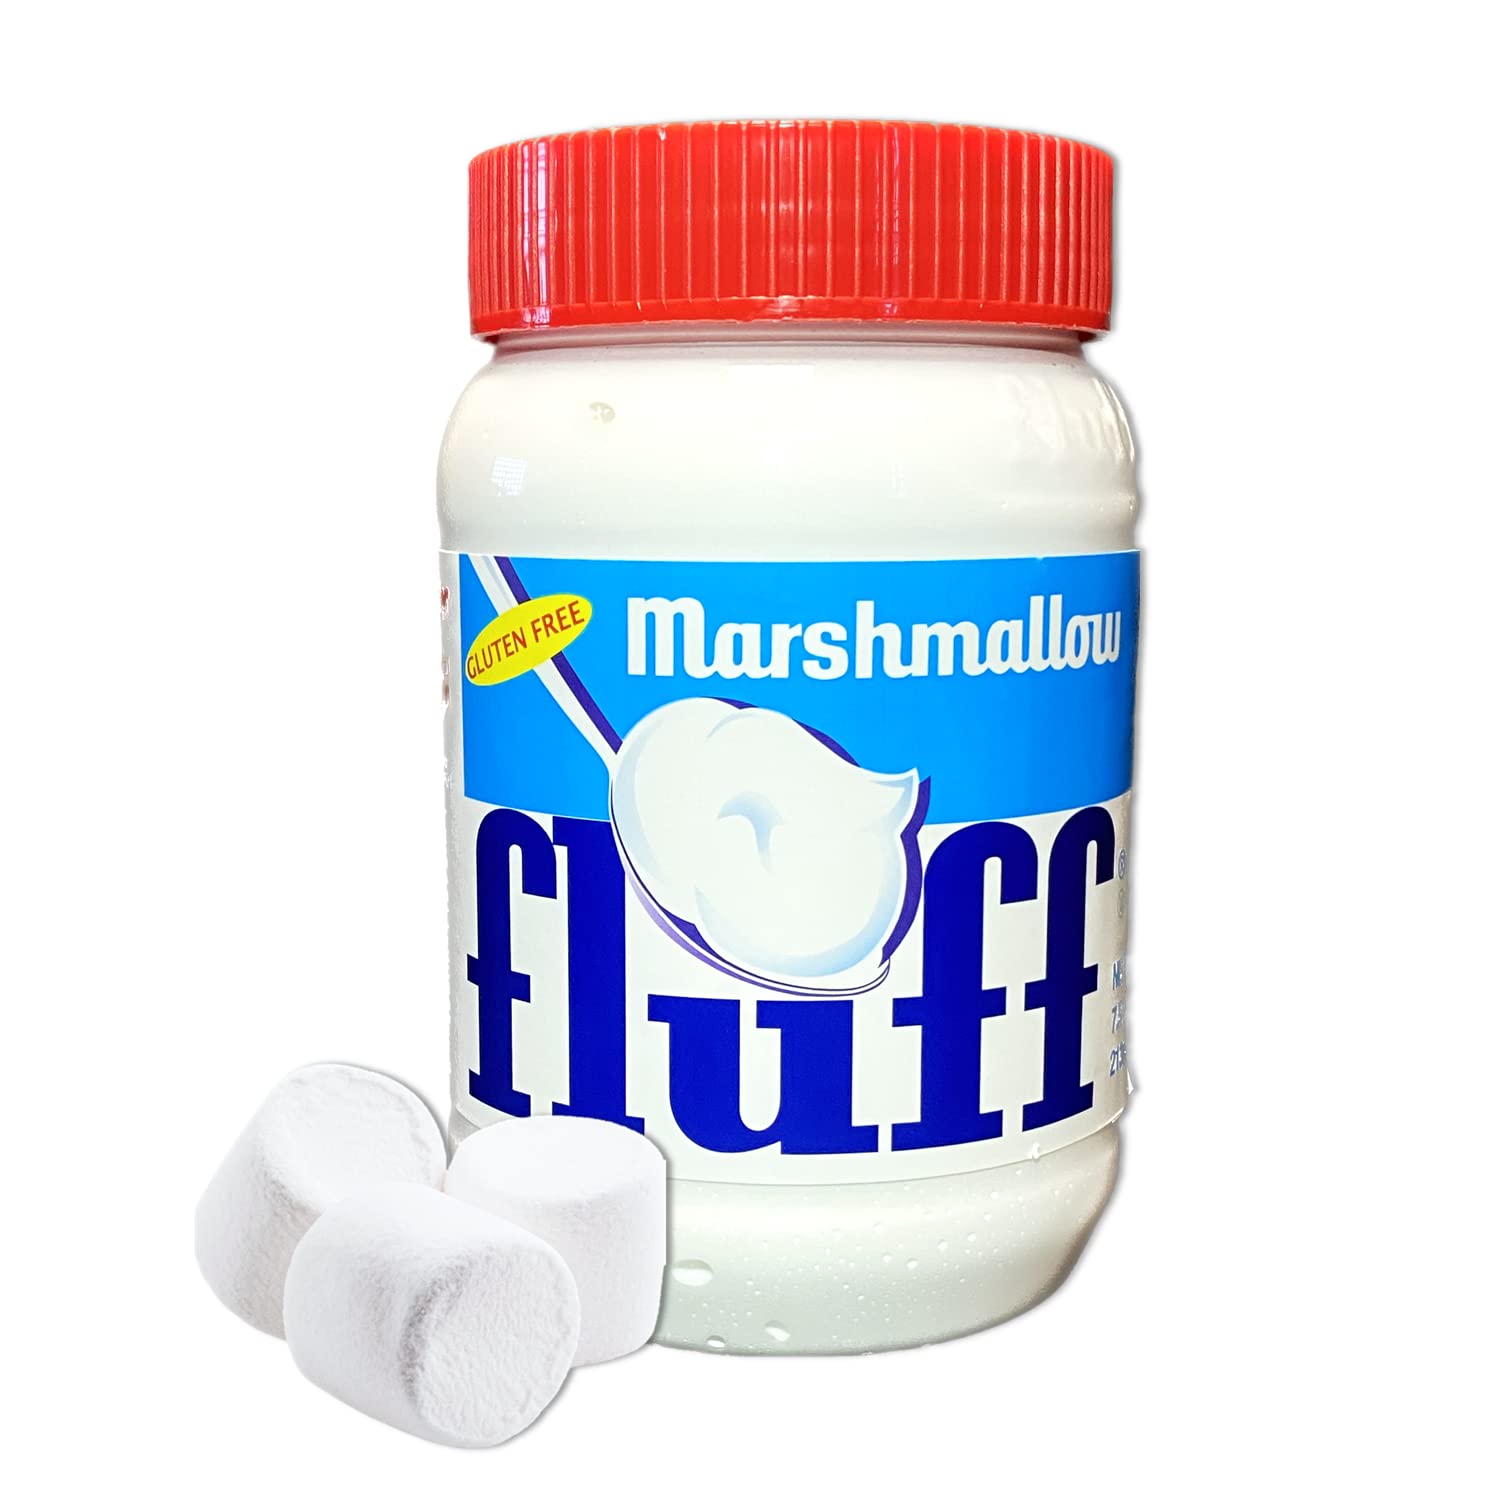 Fluff Marshmallow Original dolce fluff